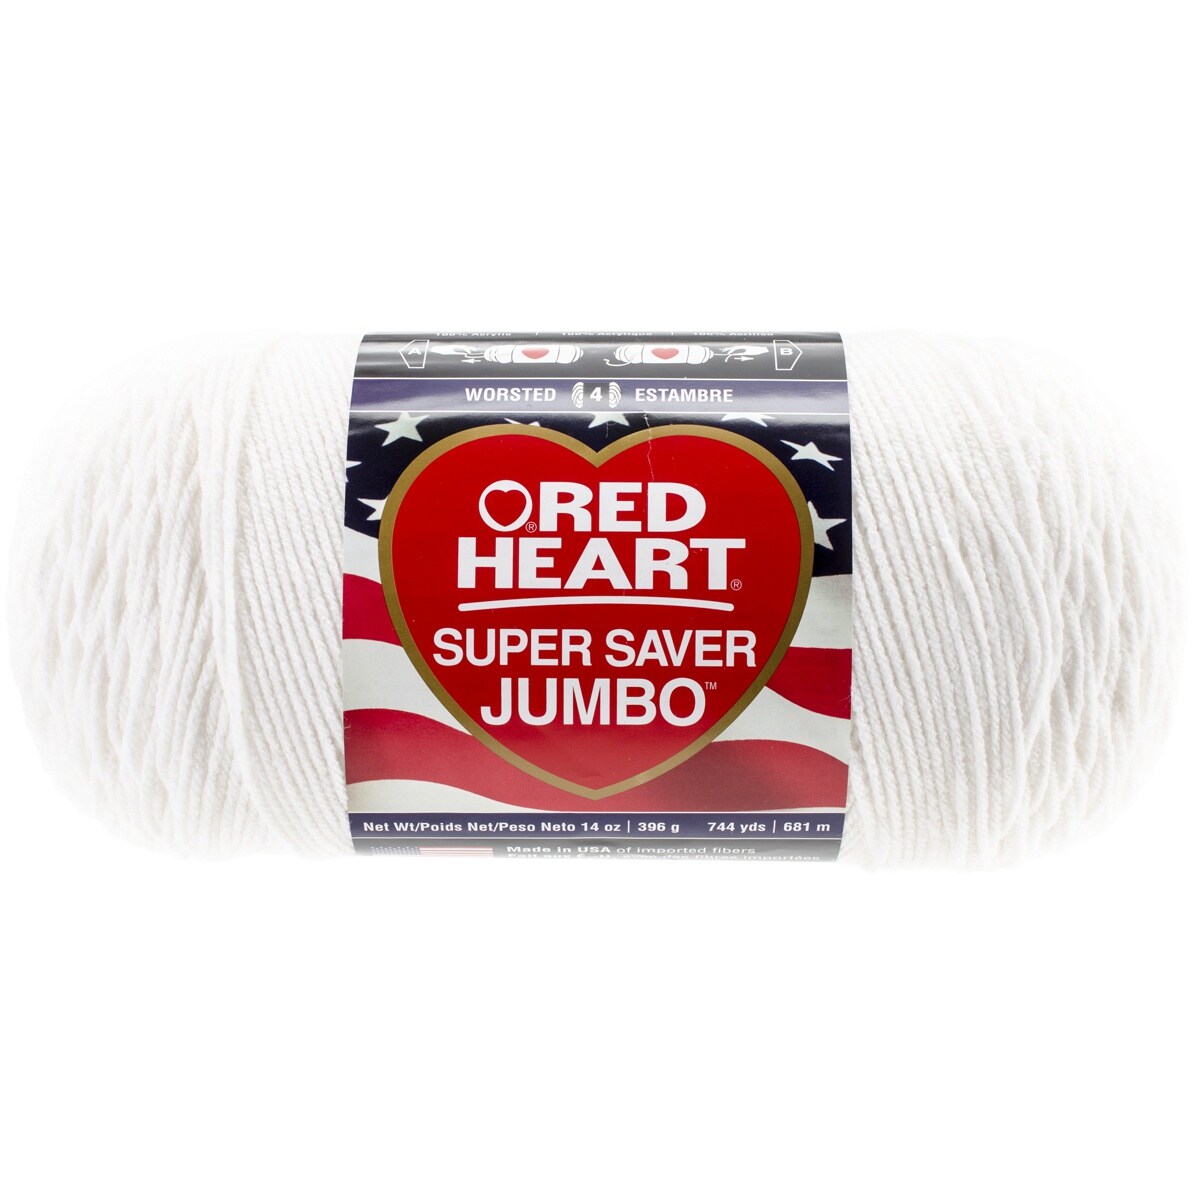 Red Heart Super Saver Yarn - White